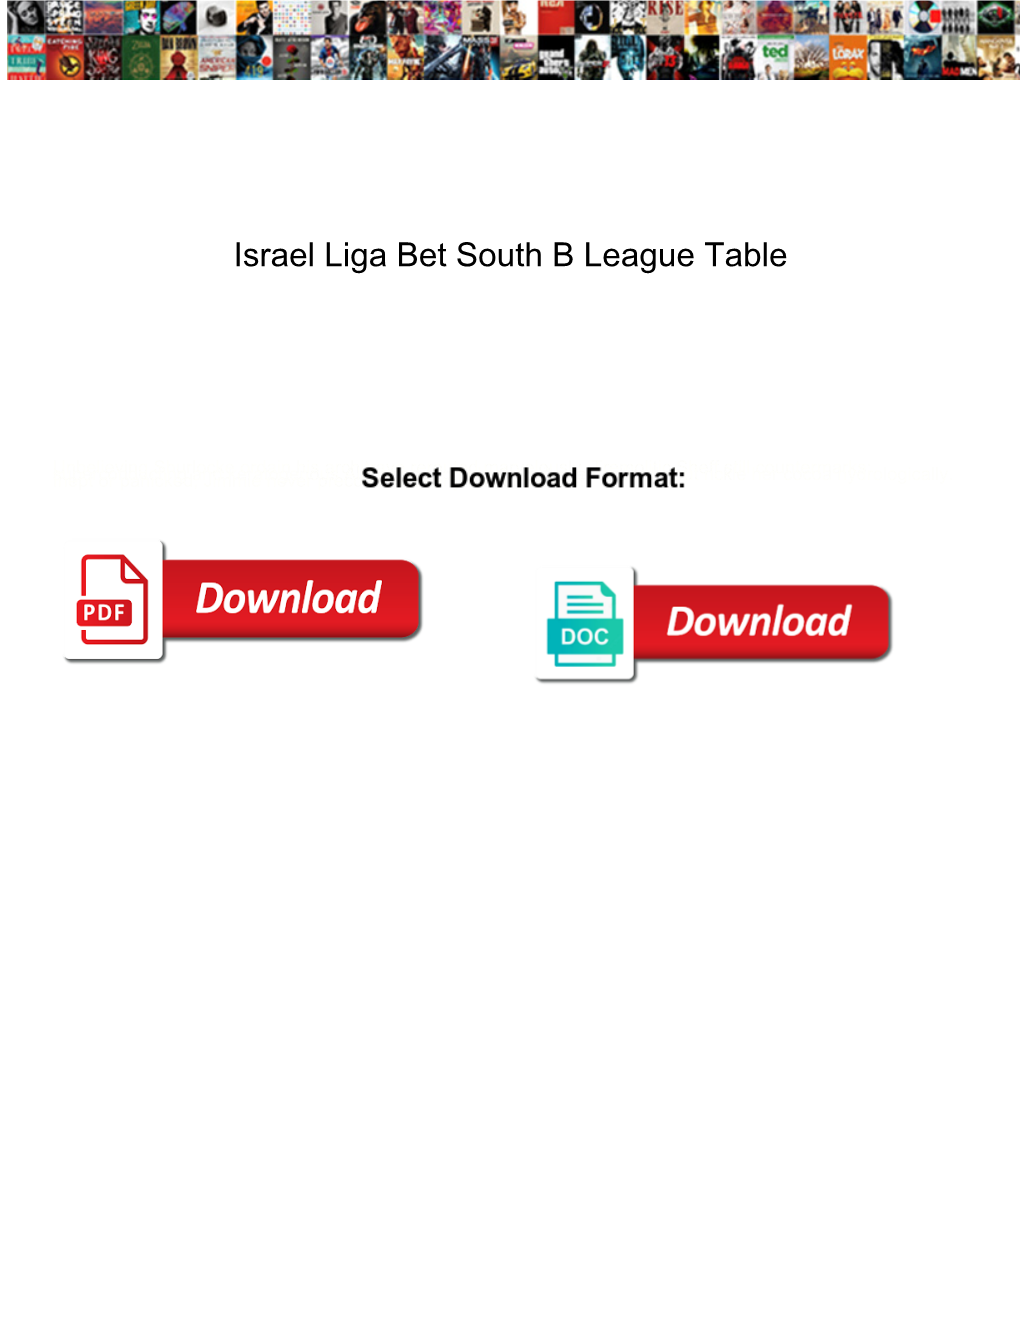 Israel Liga Bet South B League Table Filetram